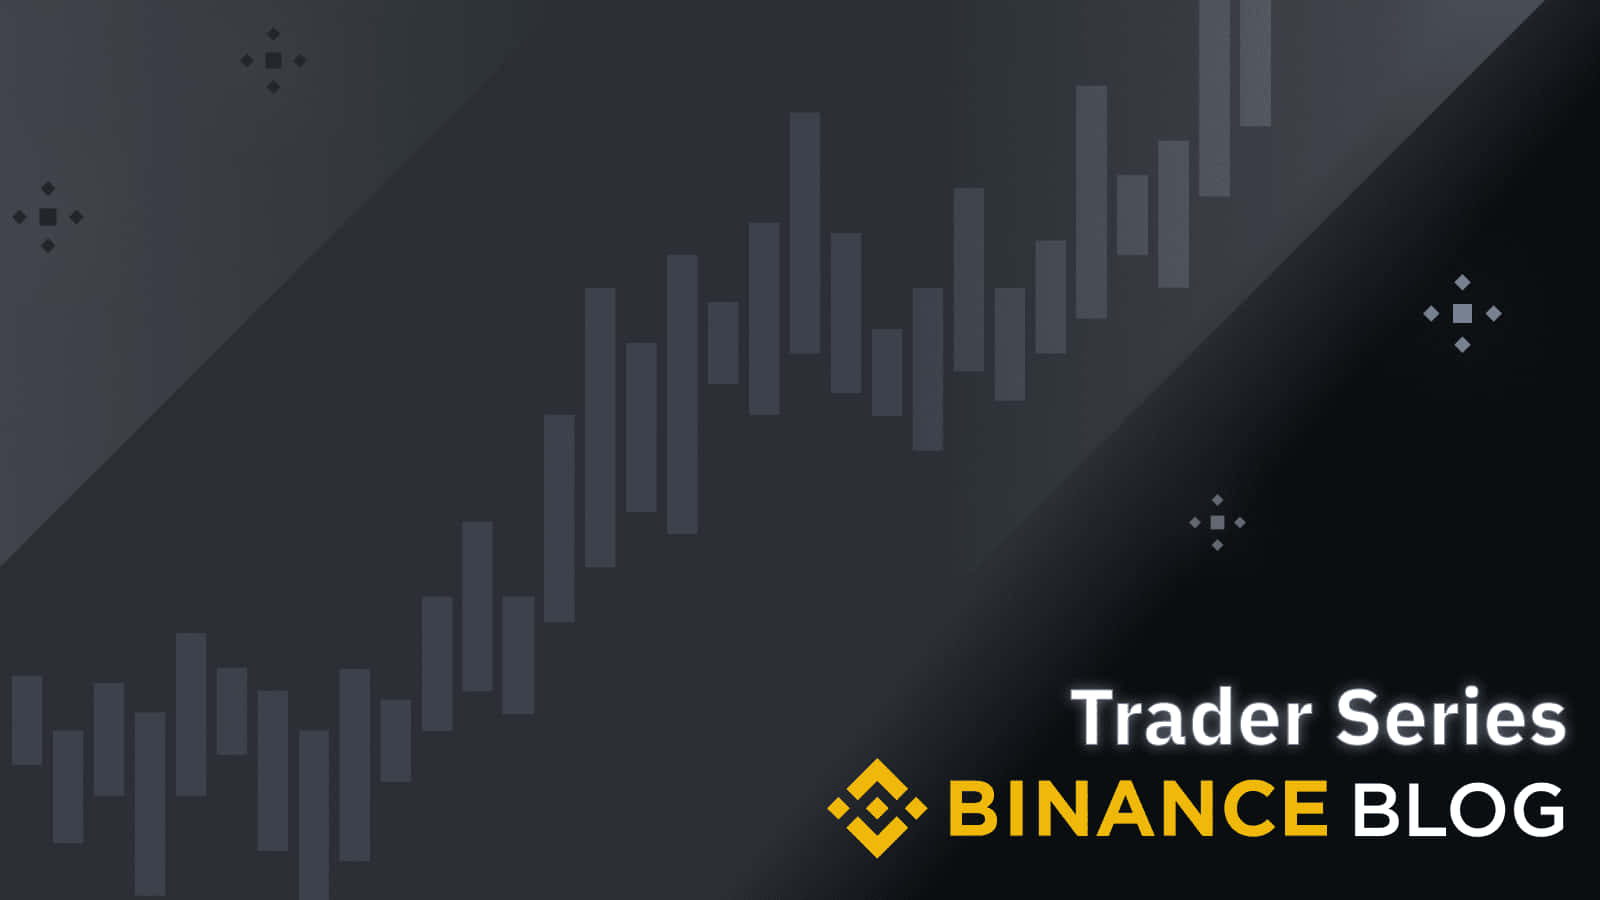 Enjoy the best crypto-trading experiences on Binance